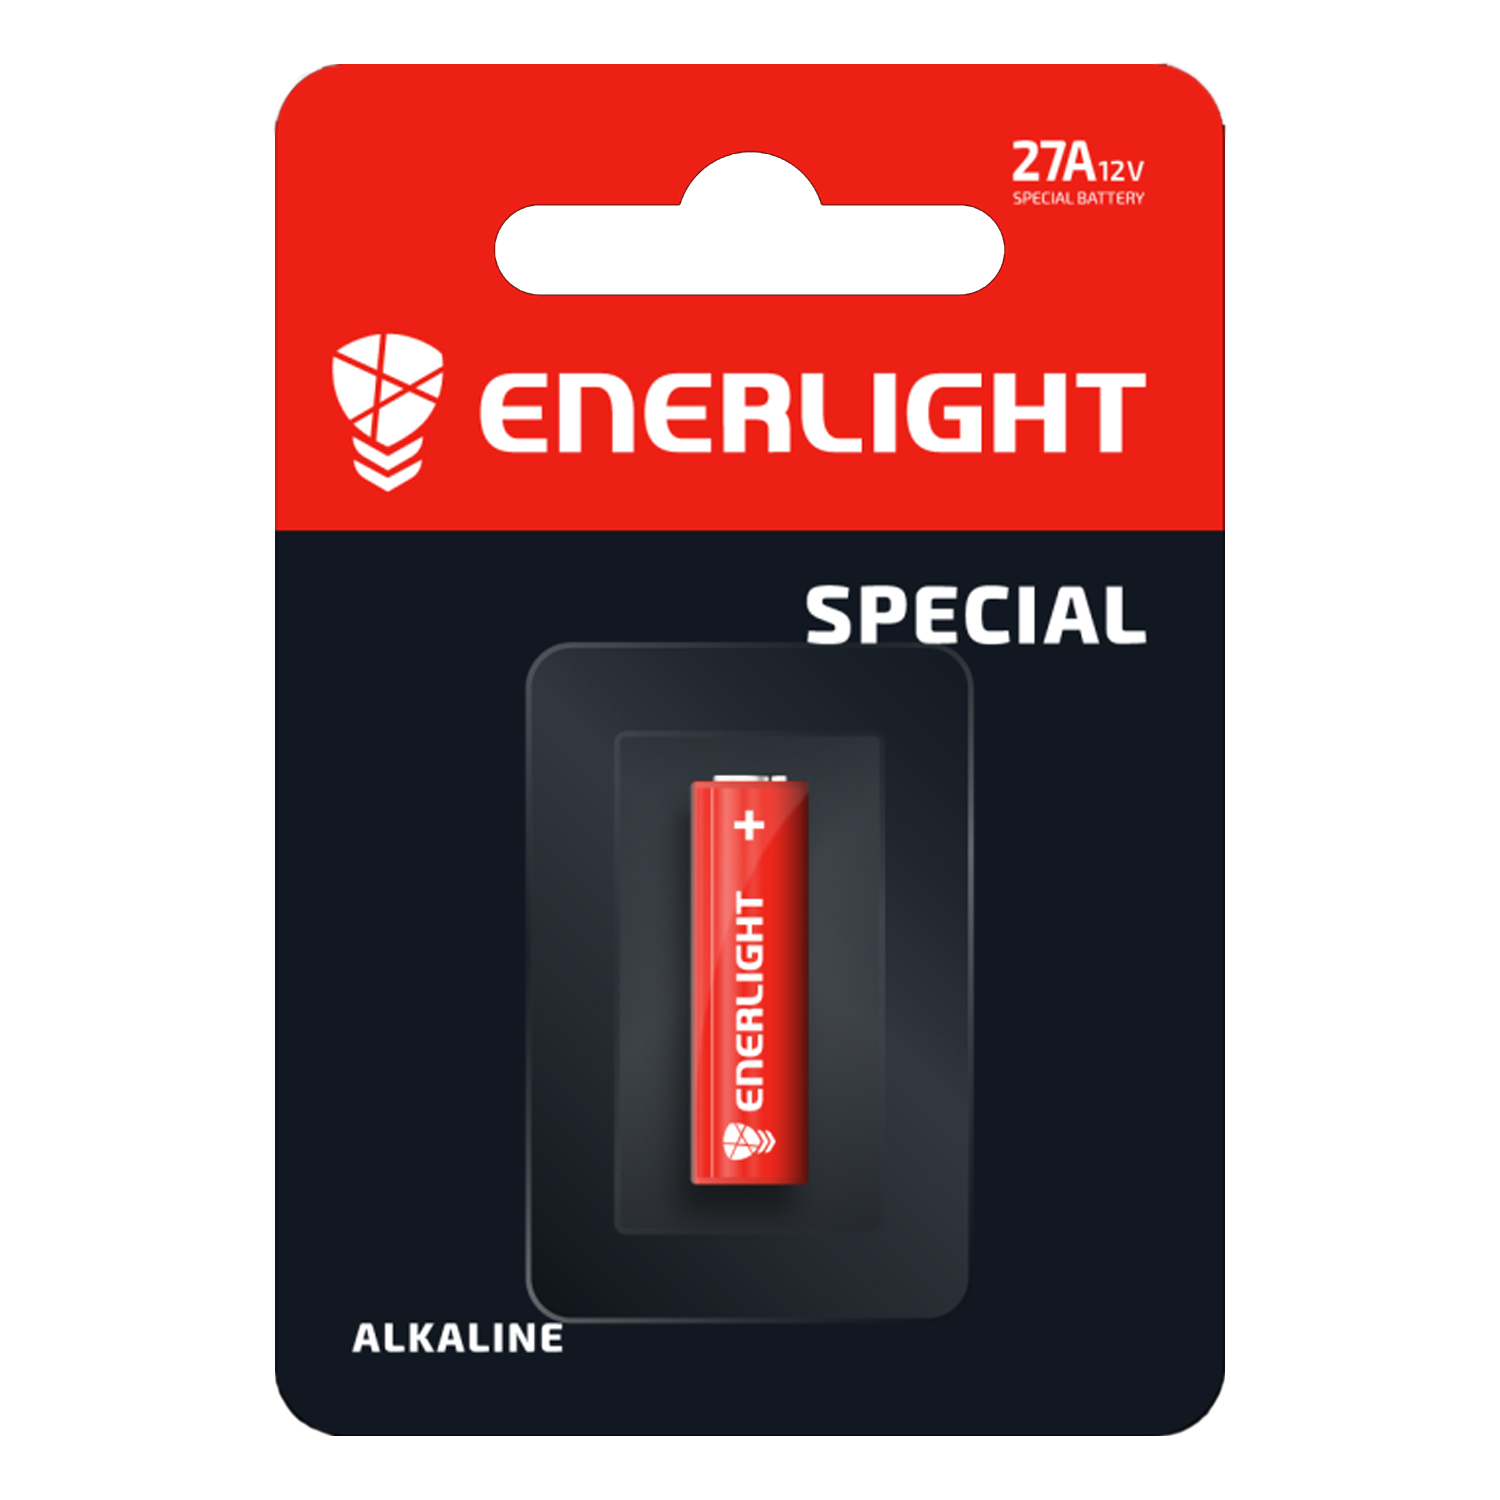 Батарейка Enerlight Special 27A alkaline, фото